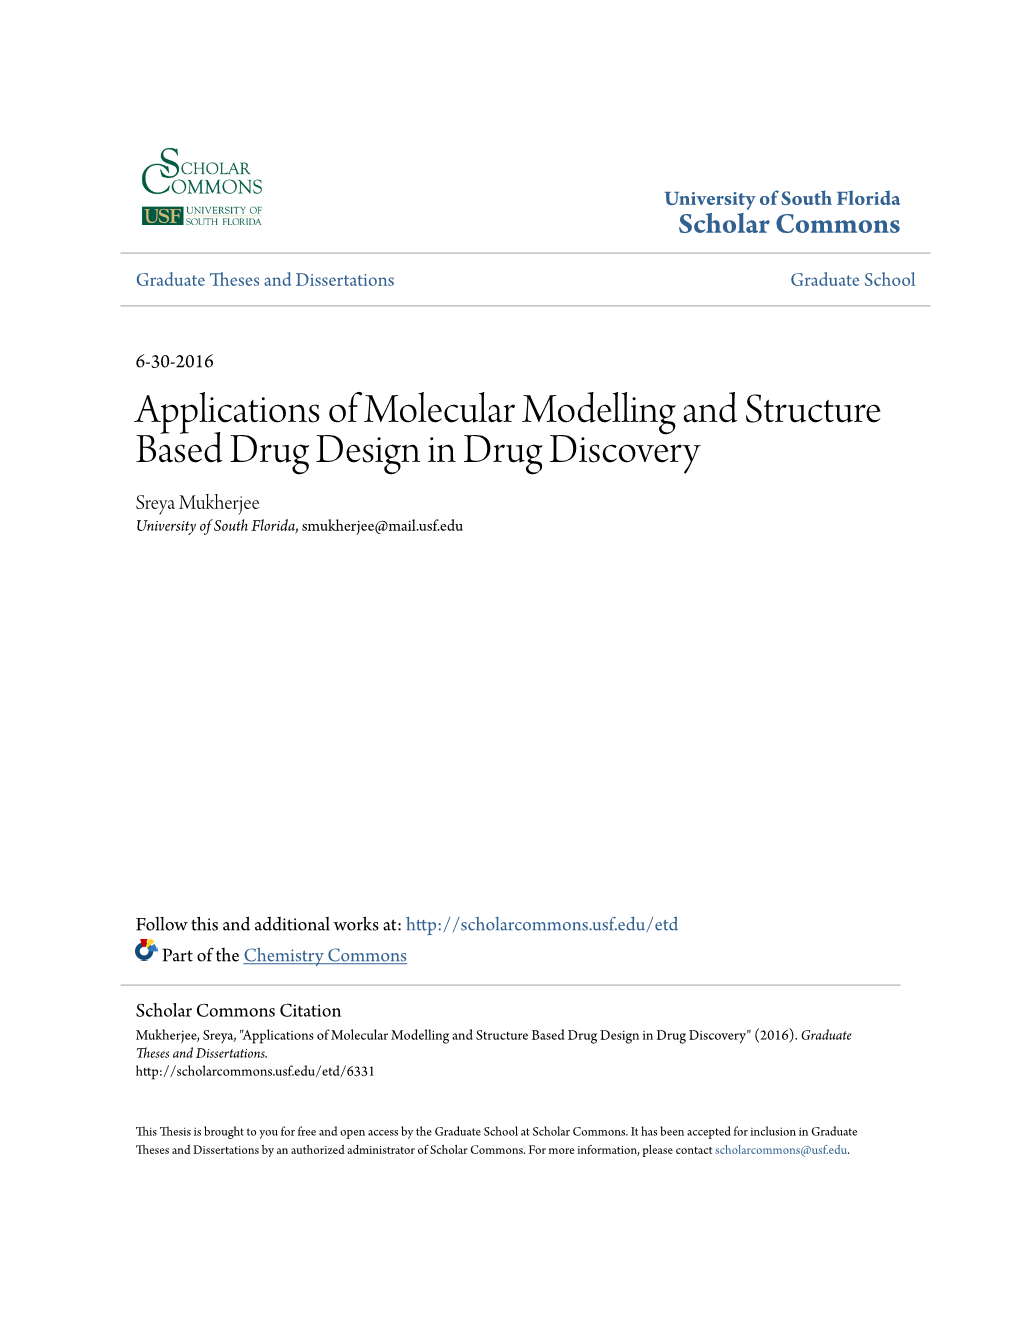 Applications of Molecular Modelling and Structure Based Drug Design in Drug Discovery Sreya Mukherjee University of South Florida, Smukherjee@Mail.Usf.Edu